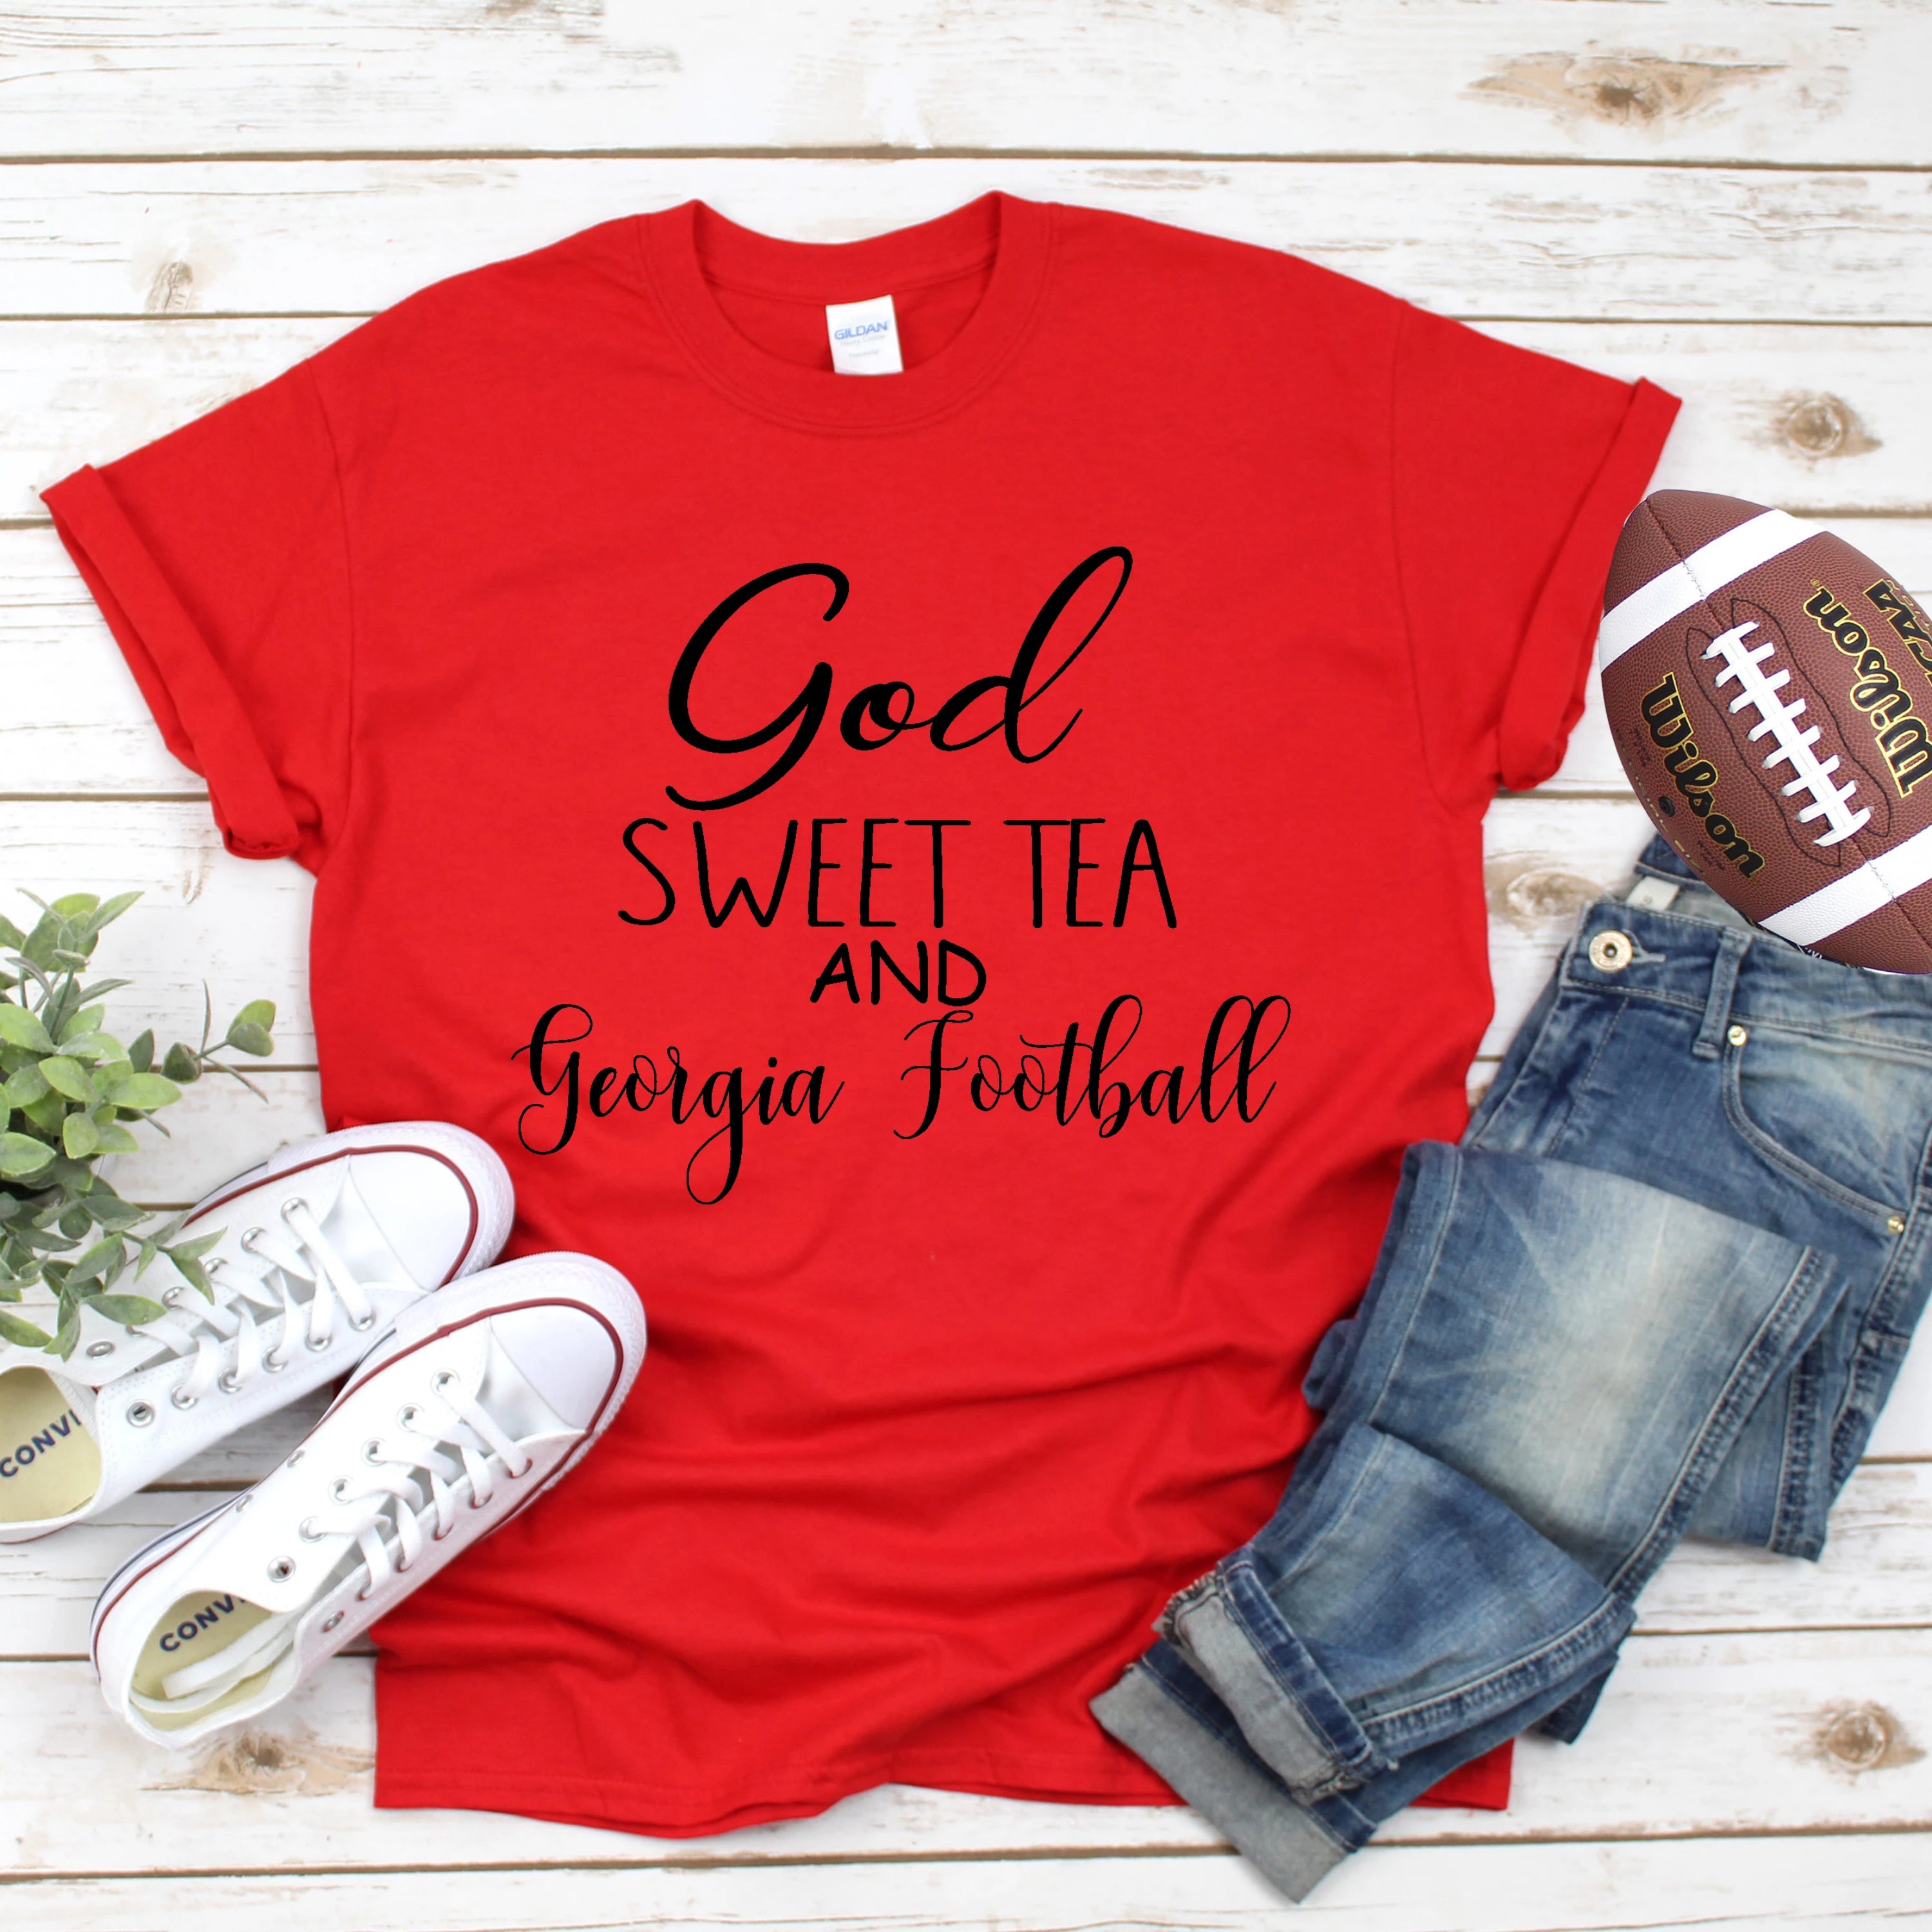 God, Sweet Tea & Georgia Football T-Shirt L Southern Ivy Boutique L / Black